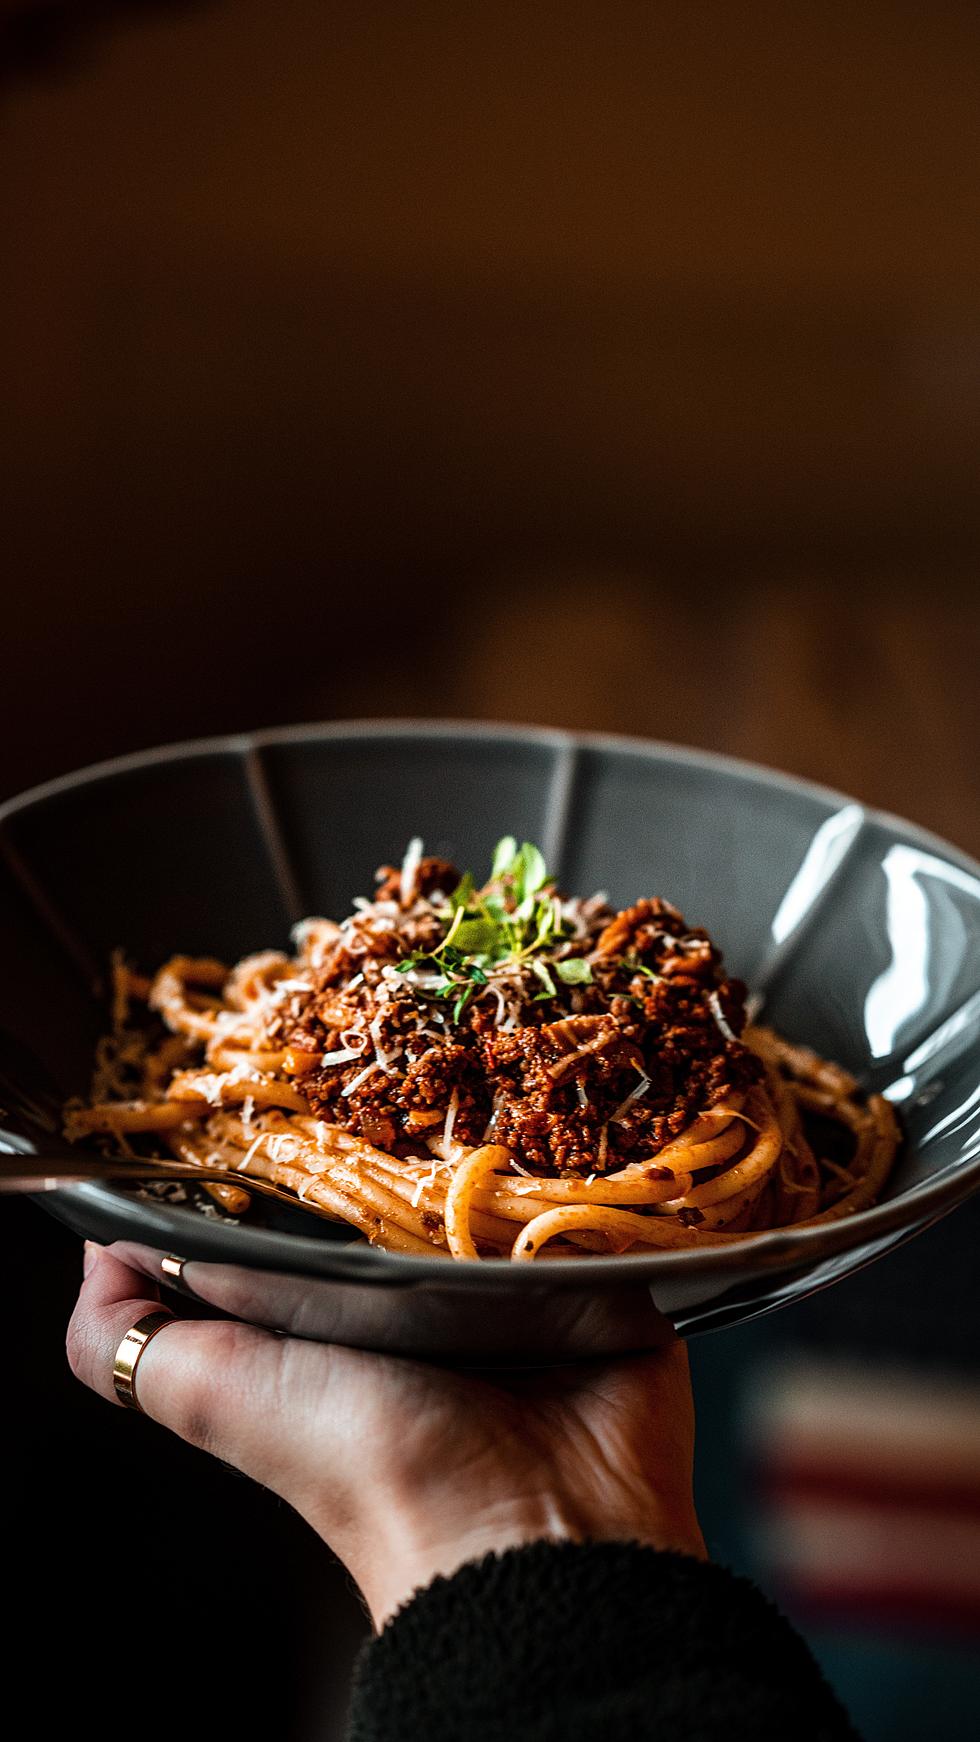 Delicious! New Jersey’s Tastiest Italian Food Reviewed